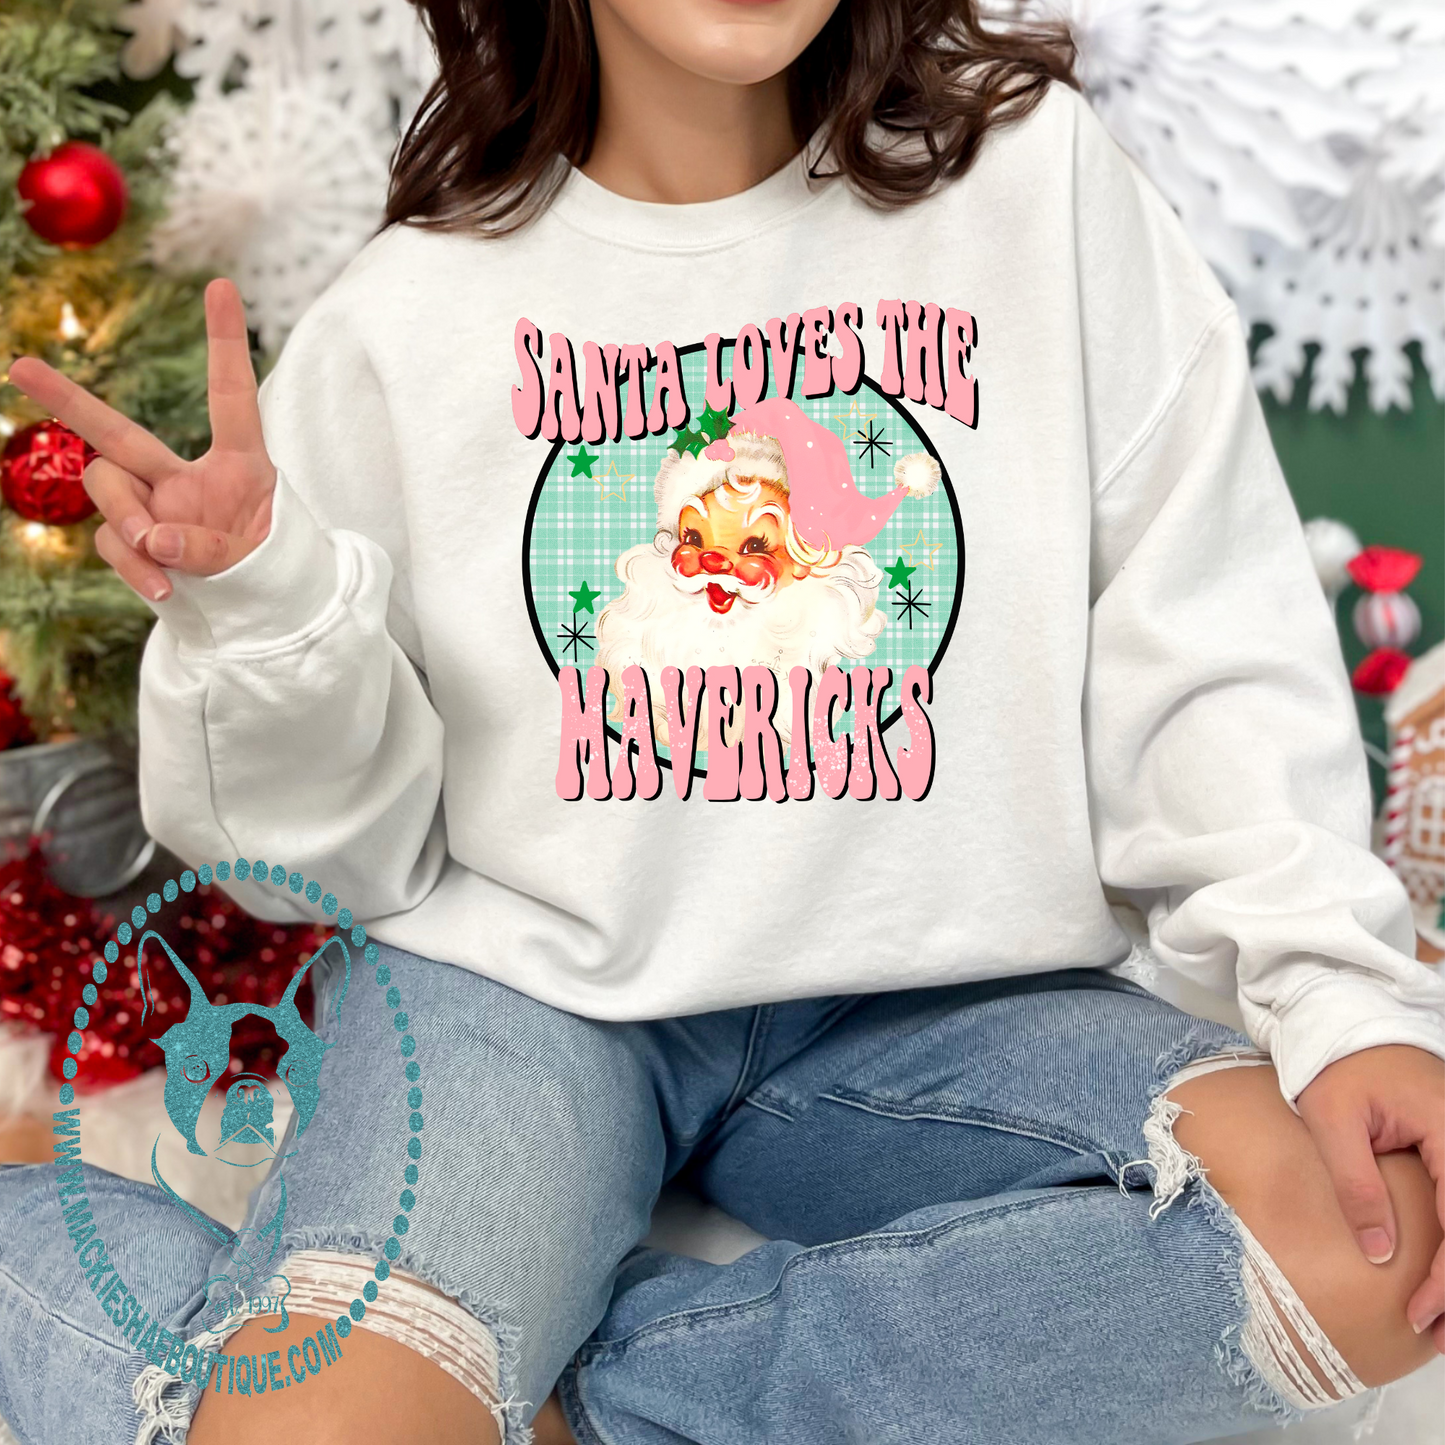 Santa Loves the Mavericks (PINK) Custom Shirt for Youth and Adults, Soft Tee & Crewneck Sweatshirt (Get Any Team)